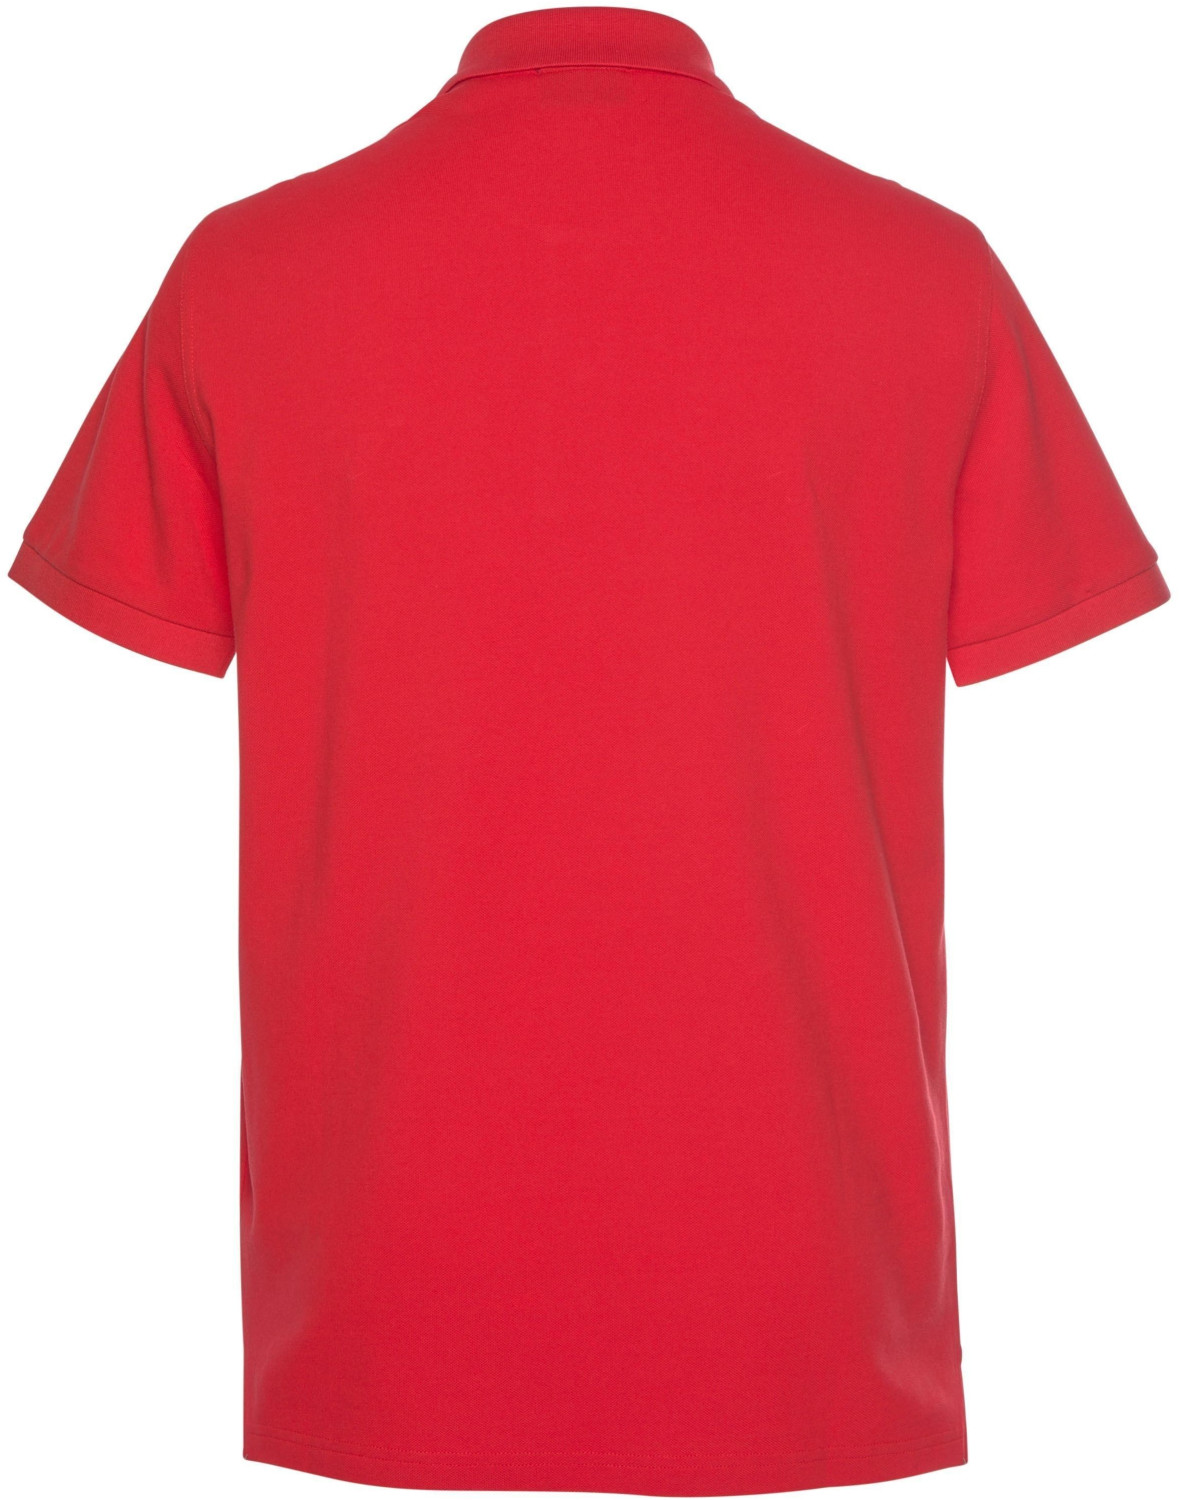 GANT Bestseller Piqué red bei 51,95 bright Shirt Preisvergleich | Polo ab (2201) €